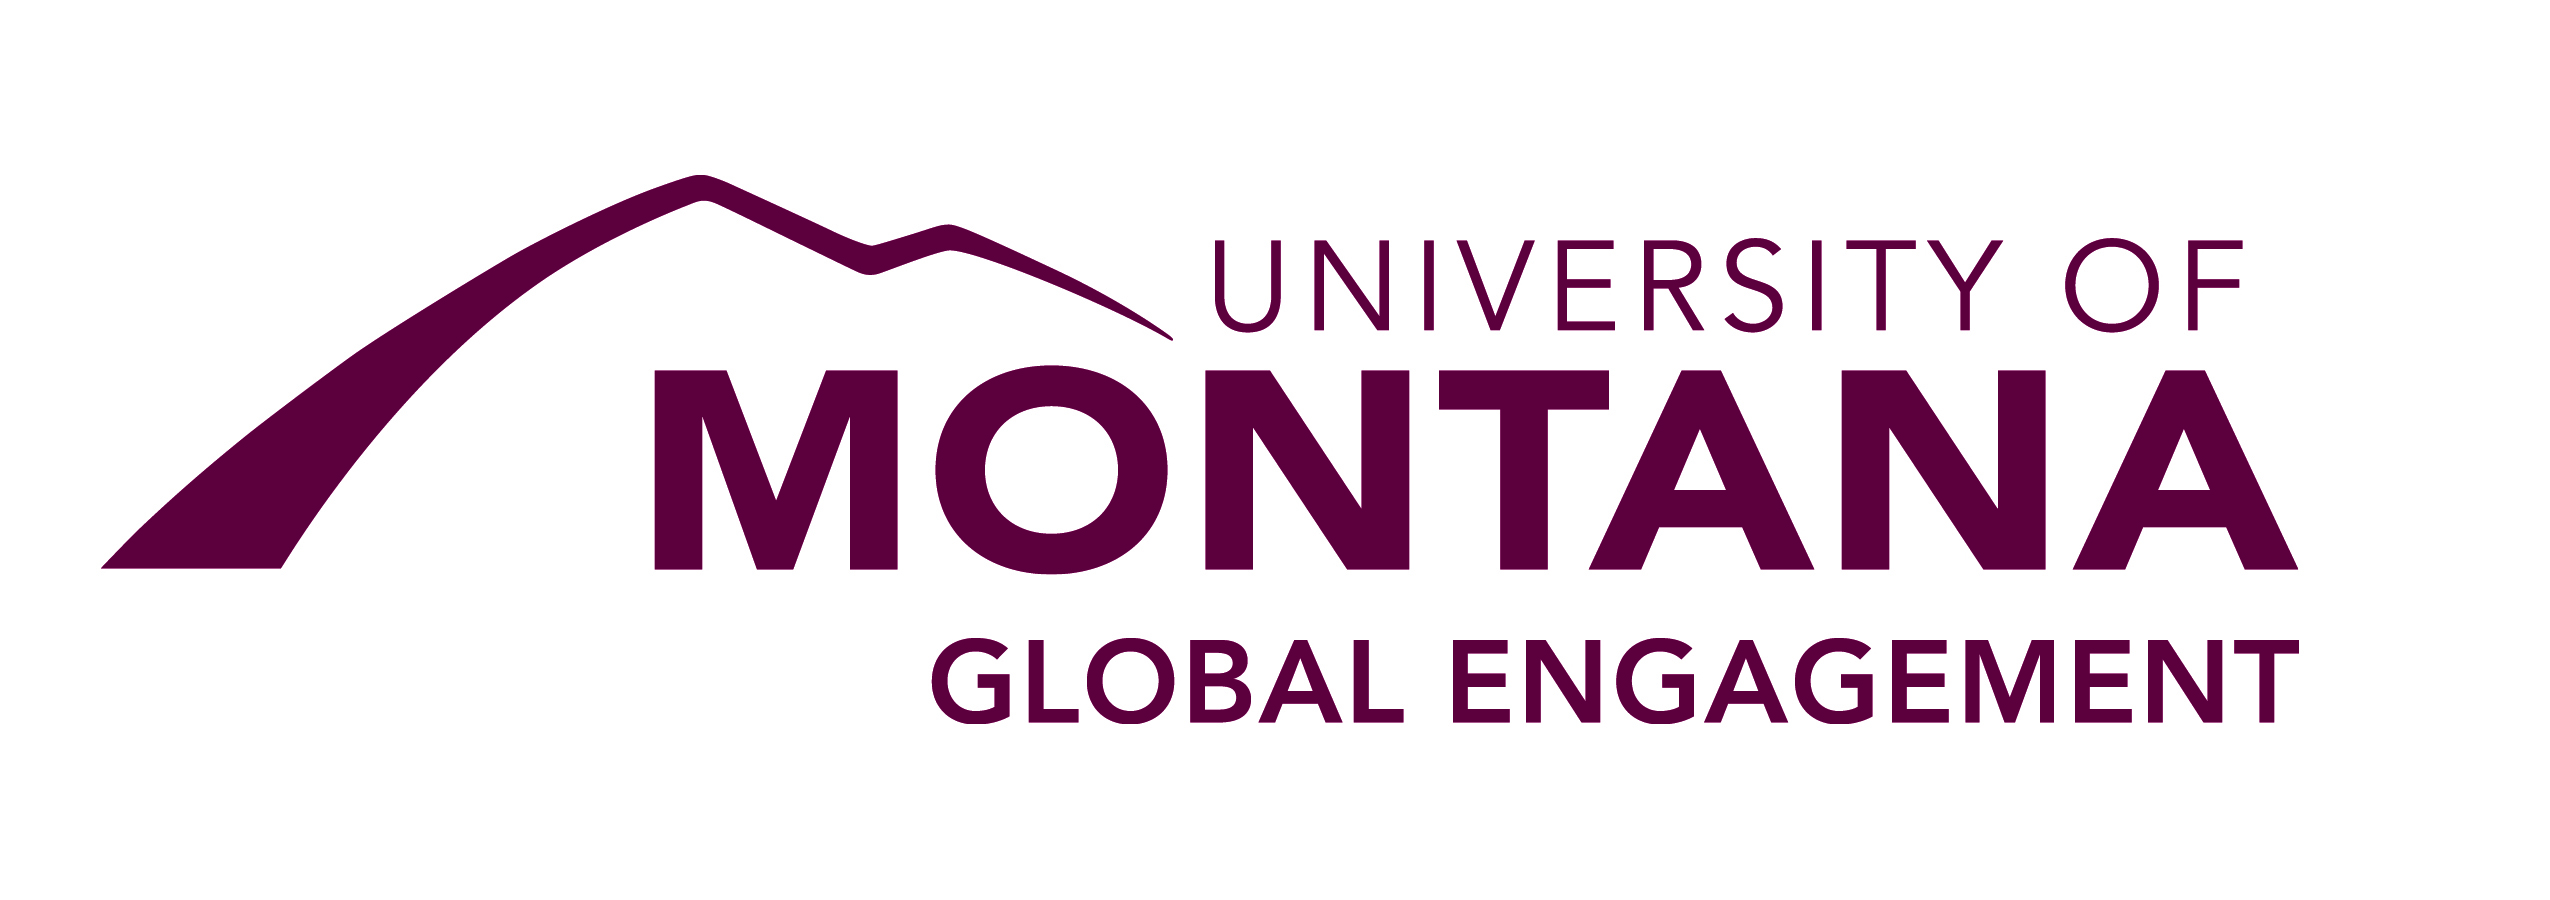 University of Montana Global Engagement Logo